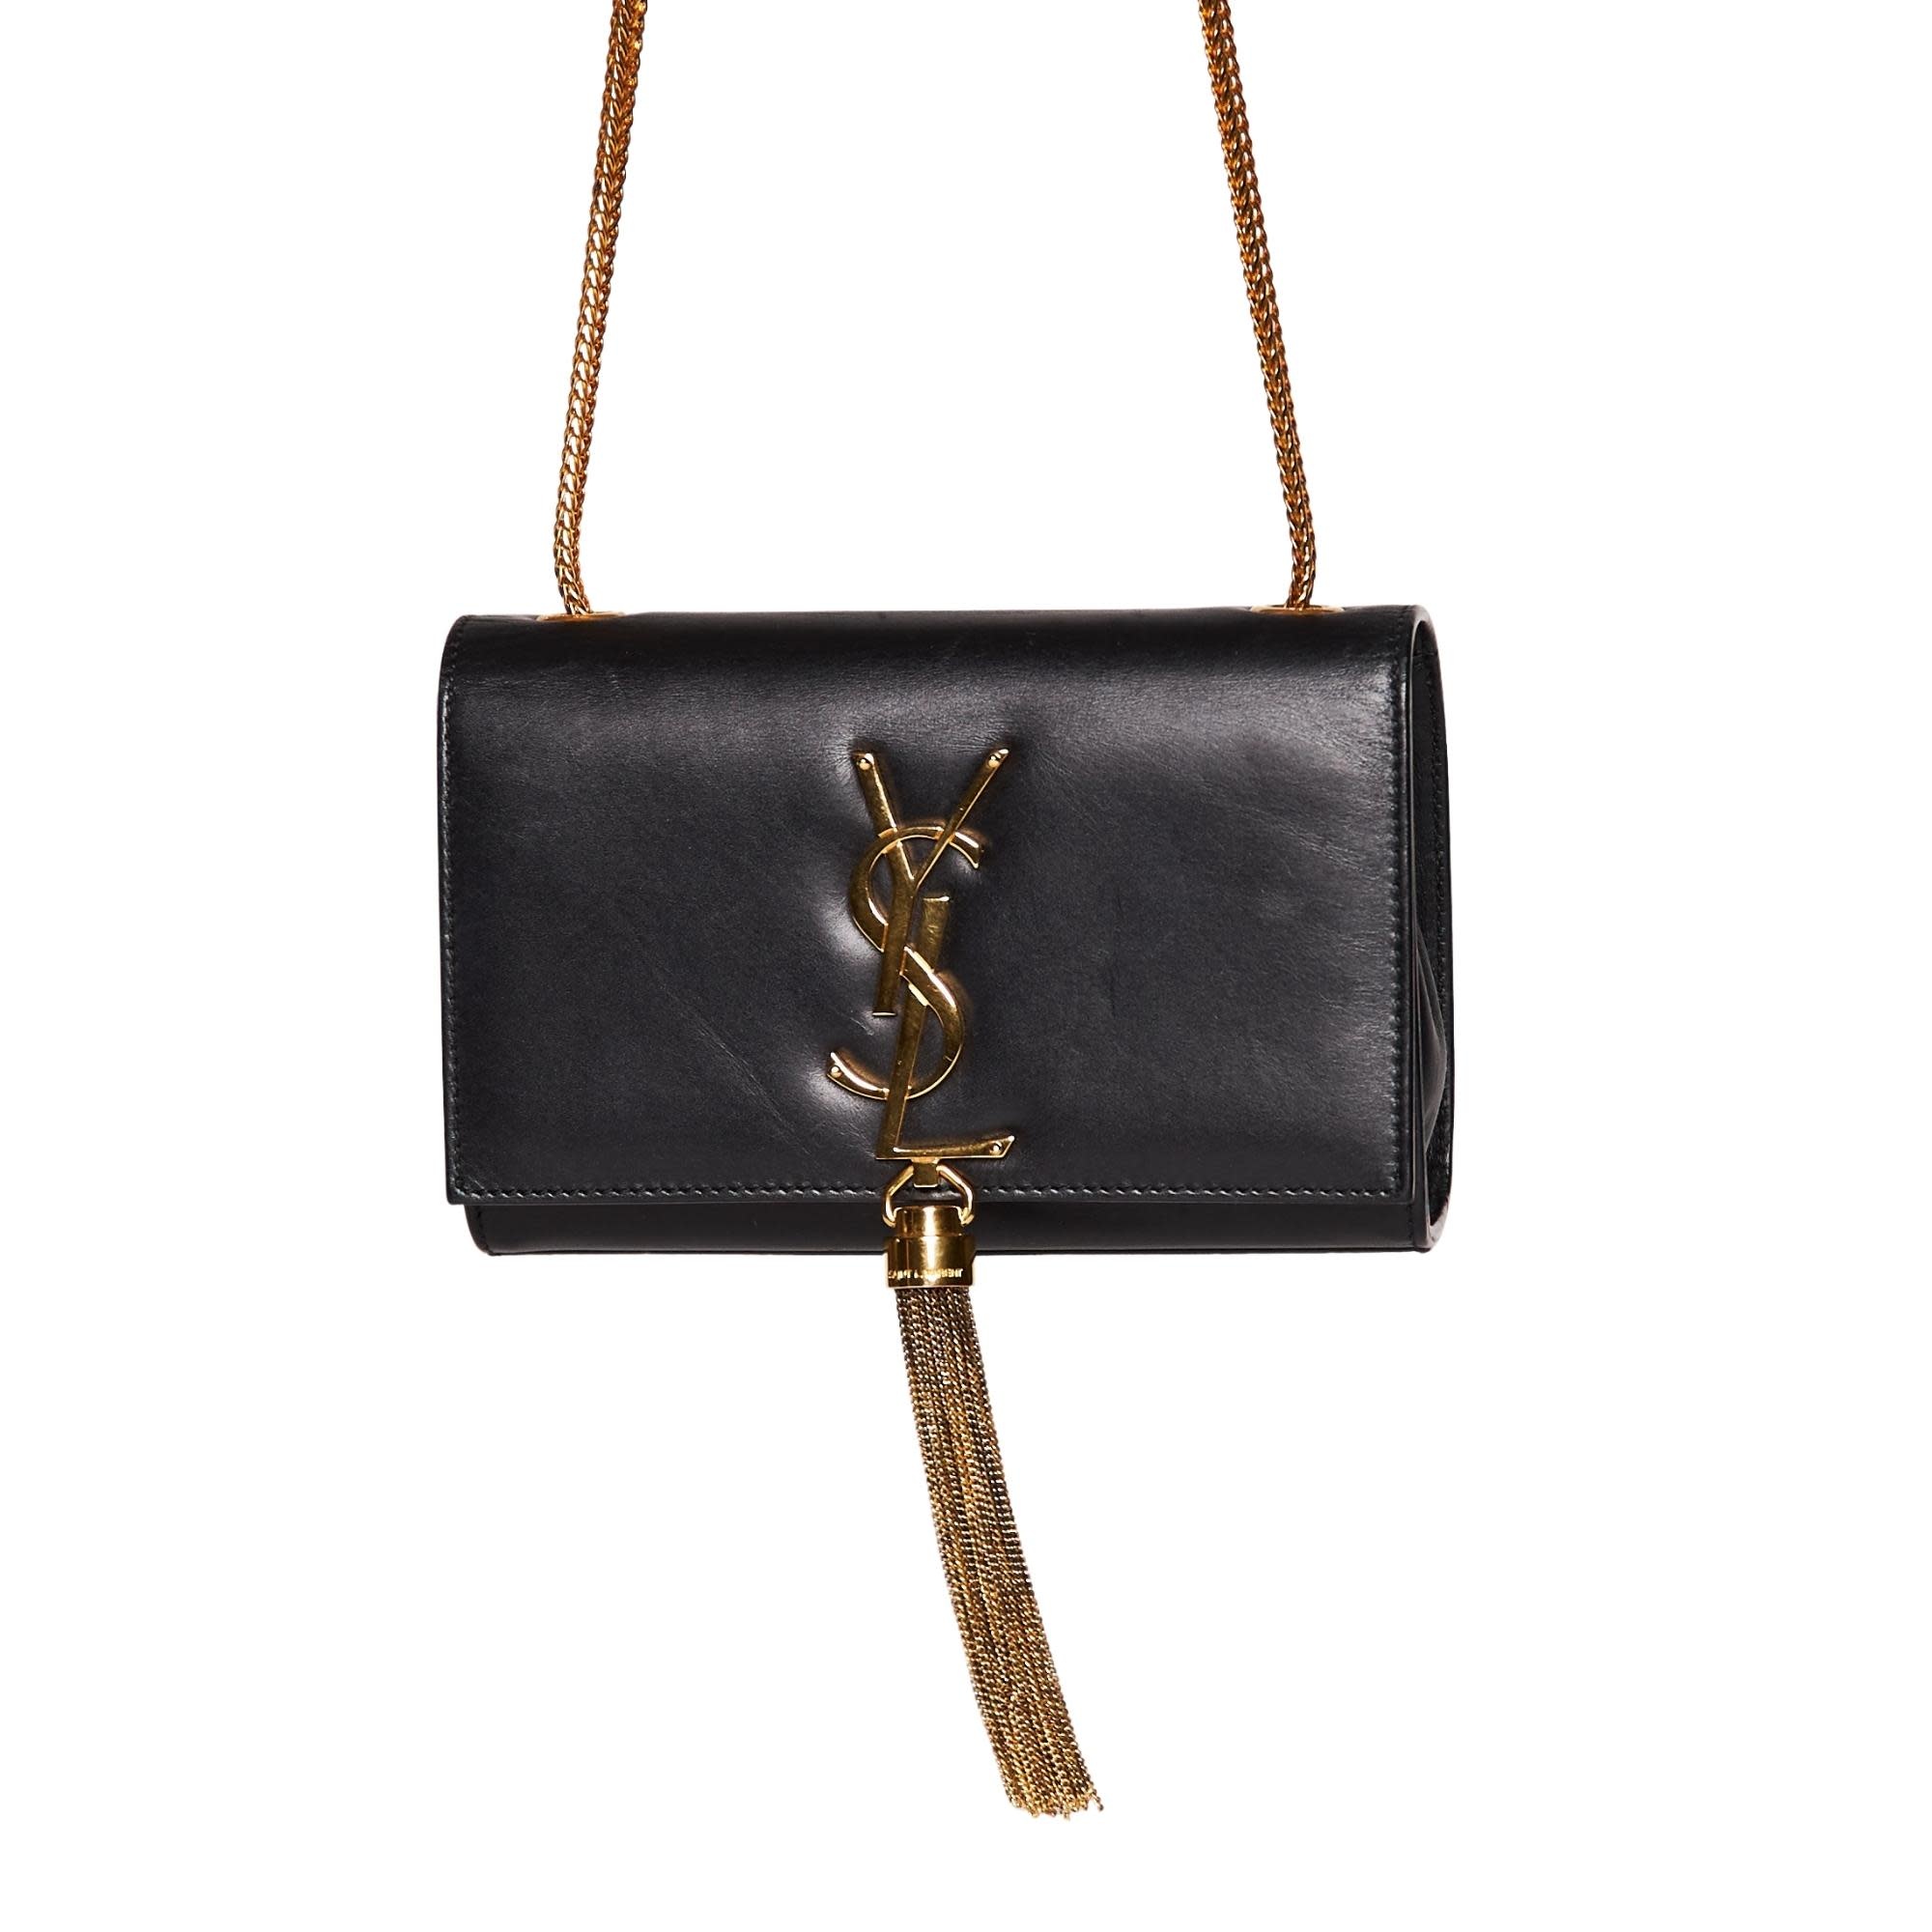 SAINT LAURENT Classic Monogram Kate Small Bag – Black on Black